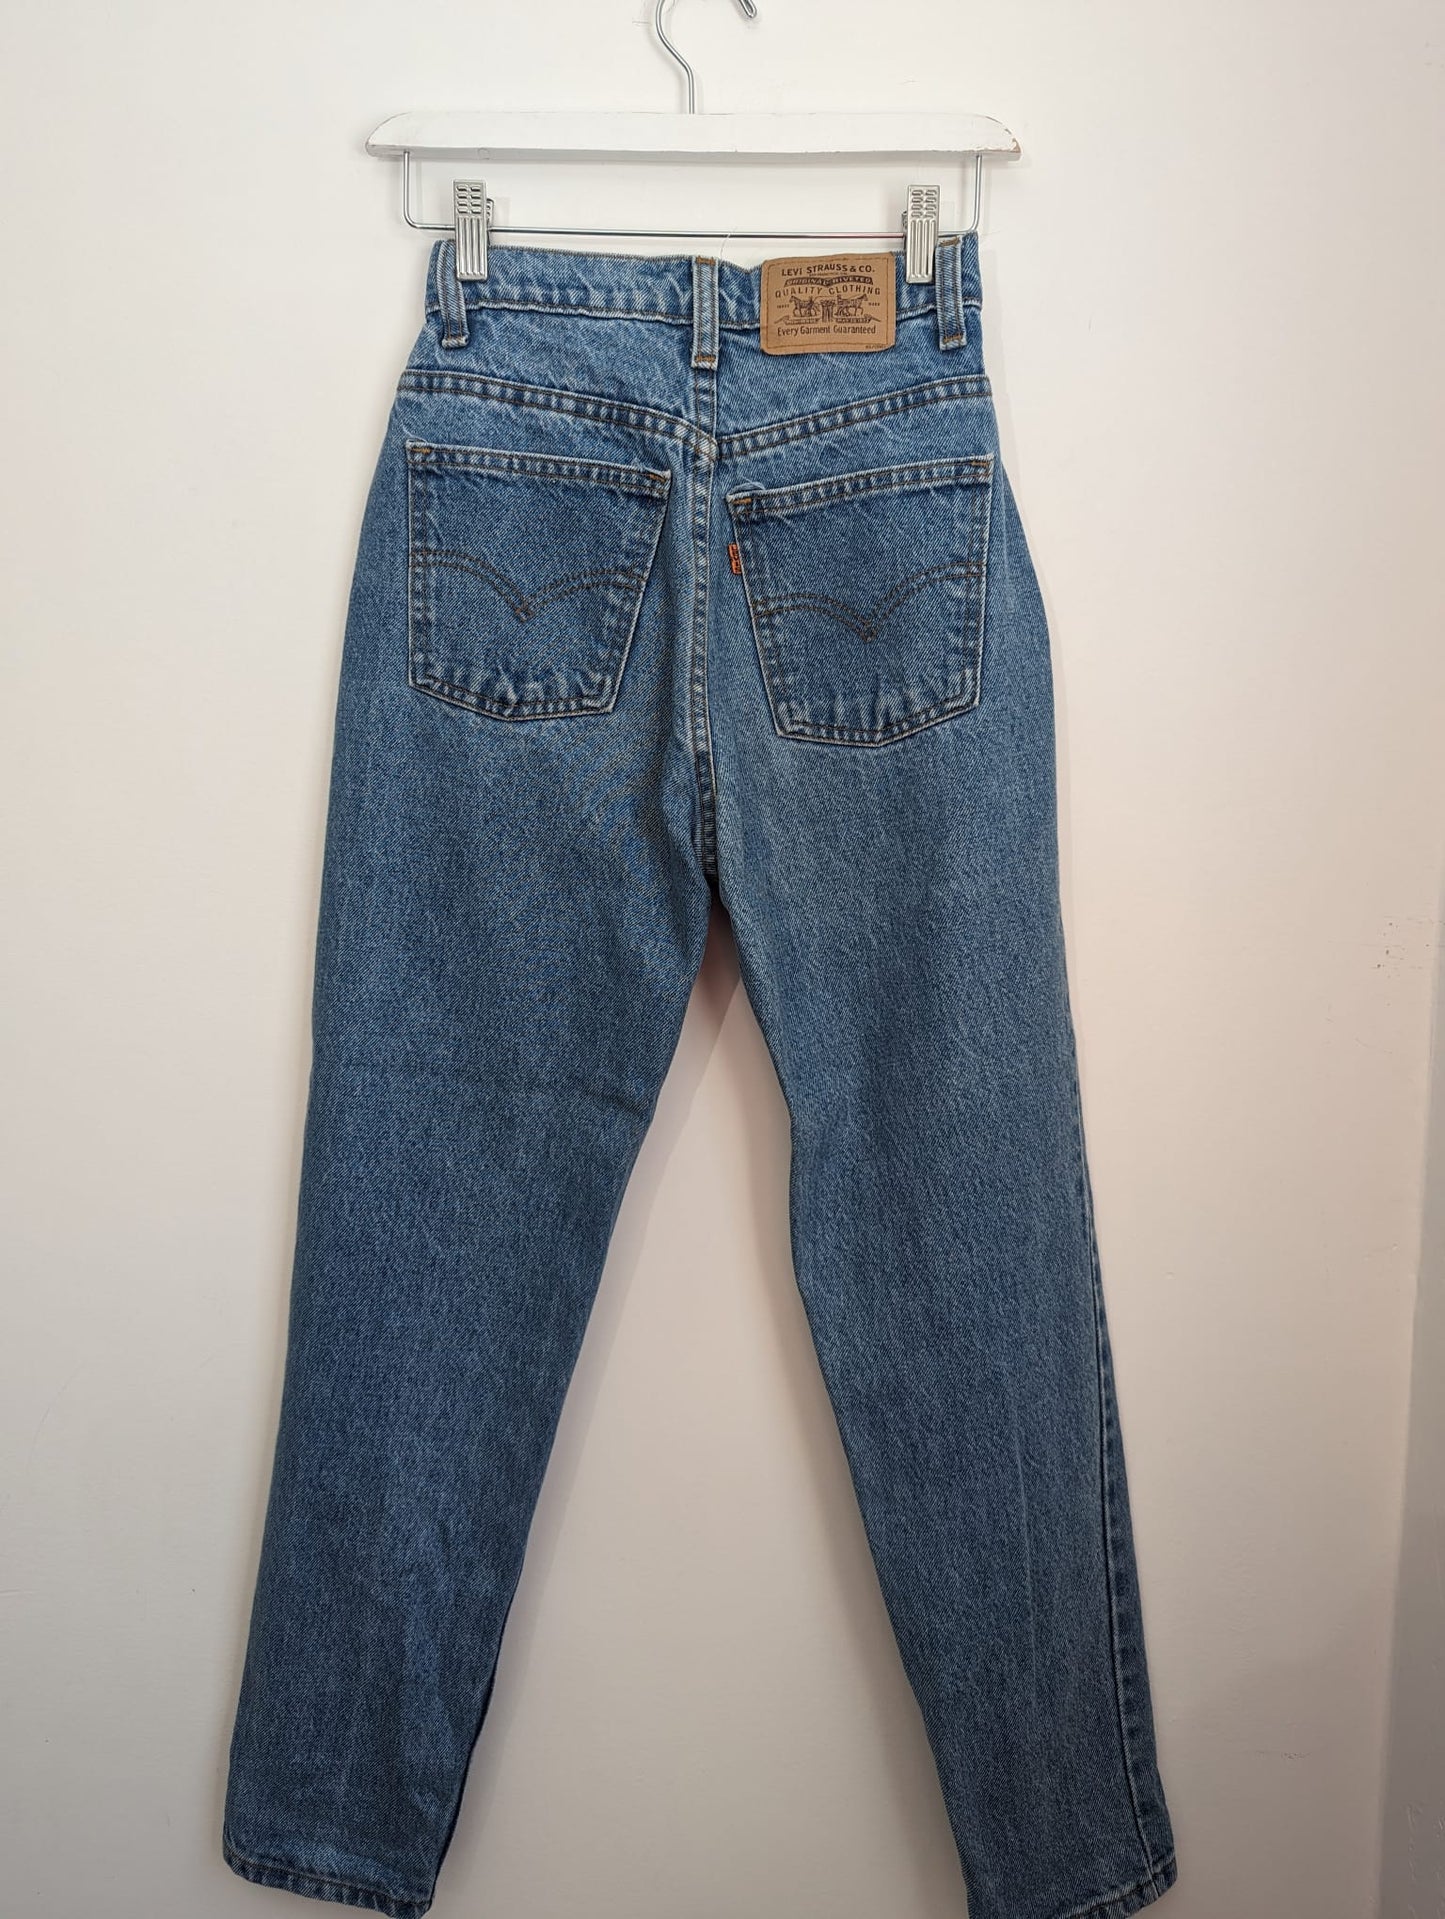 Levi's Vintage Light Wash Orange Tab Jeans - Size 24